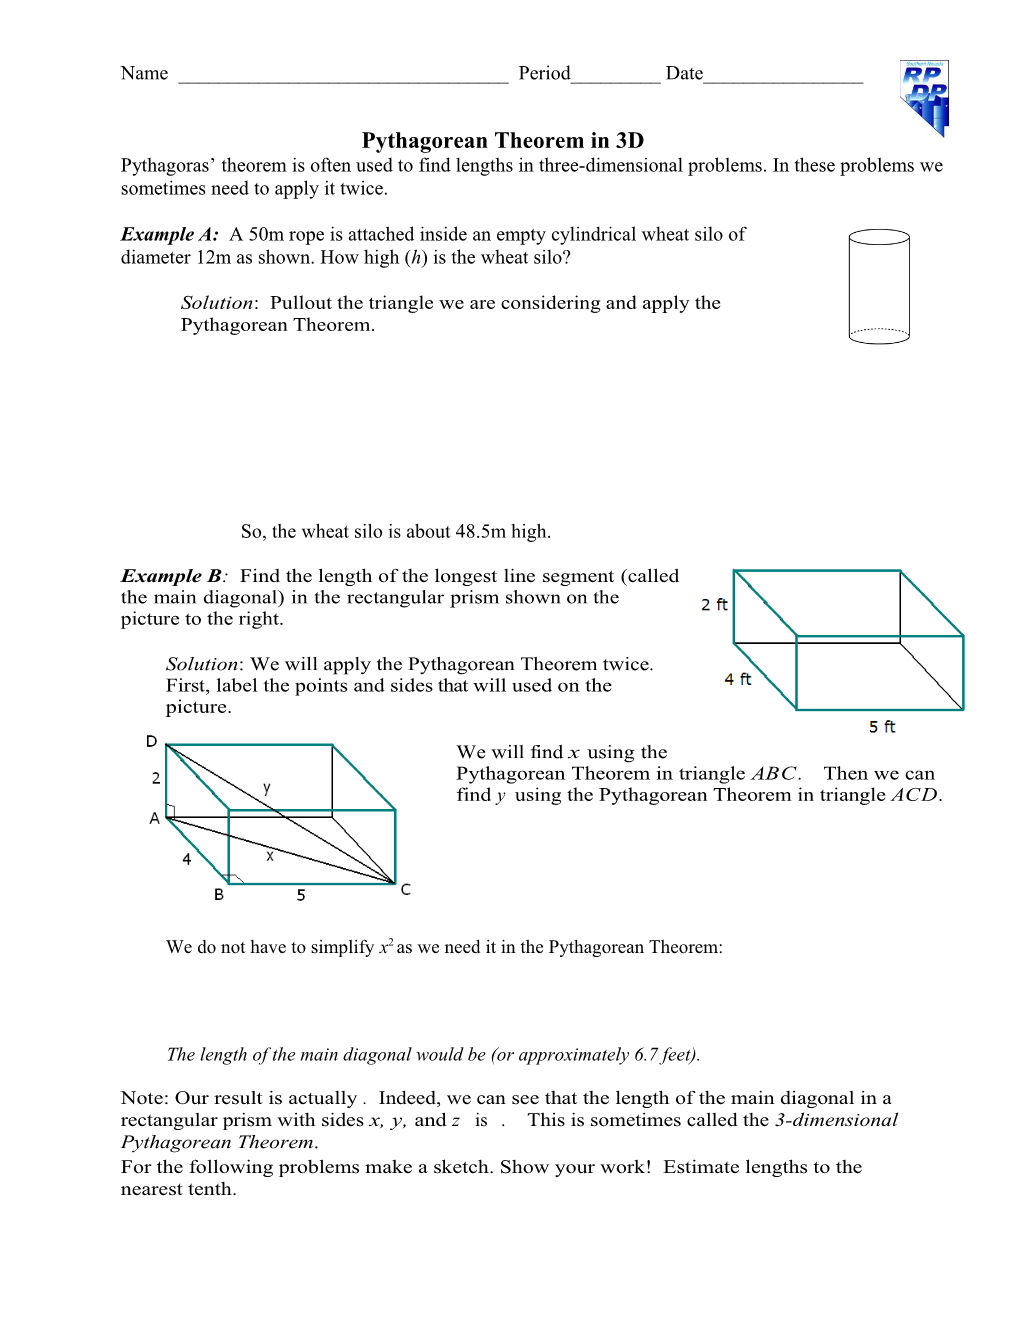 Pythagorean Theorem in 3D